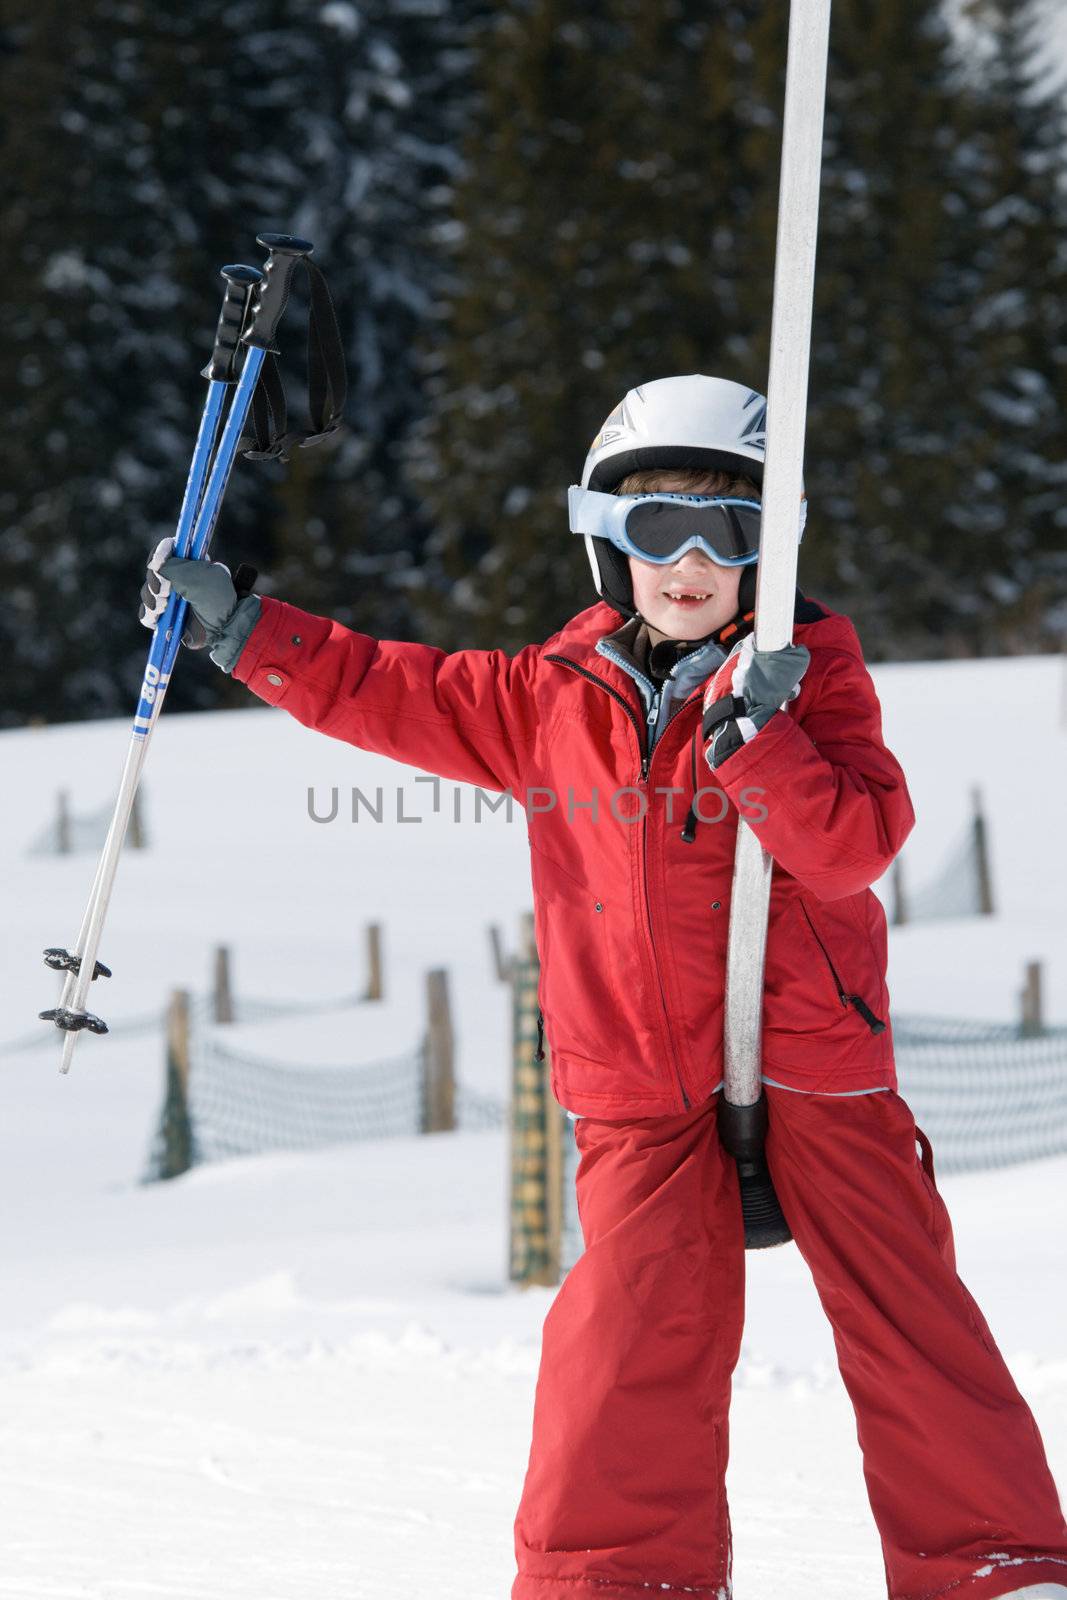 Boy on a ski lift by RuthBlack